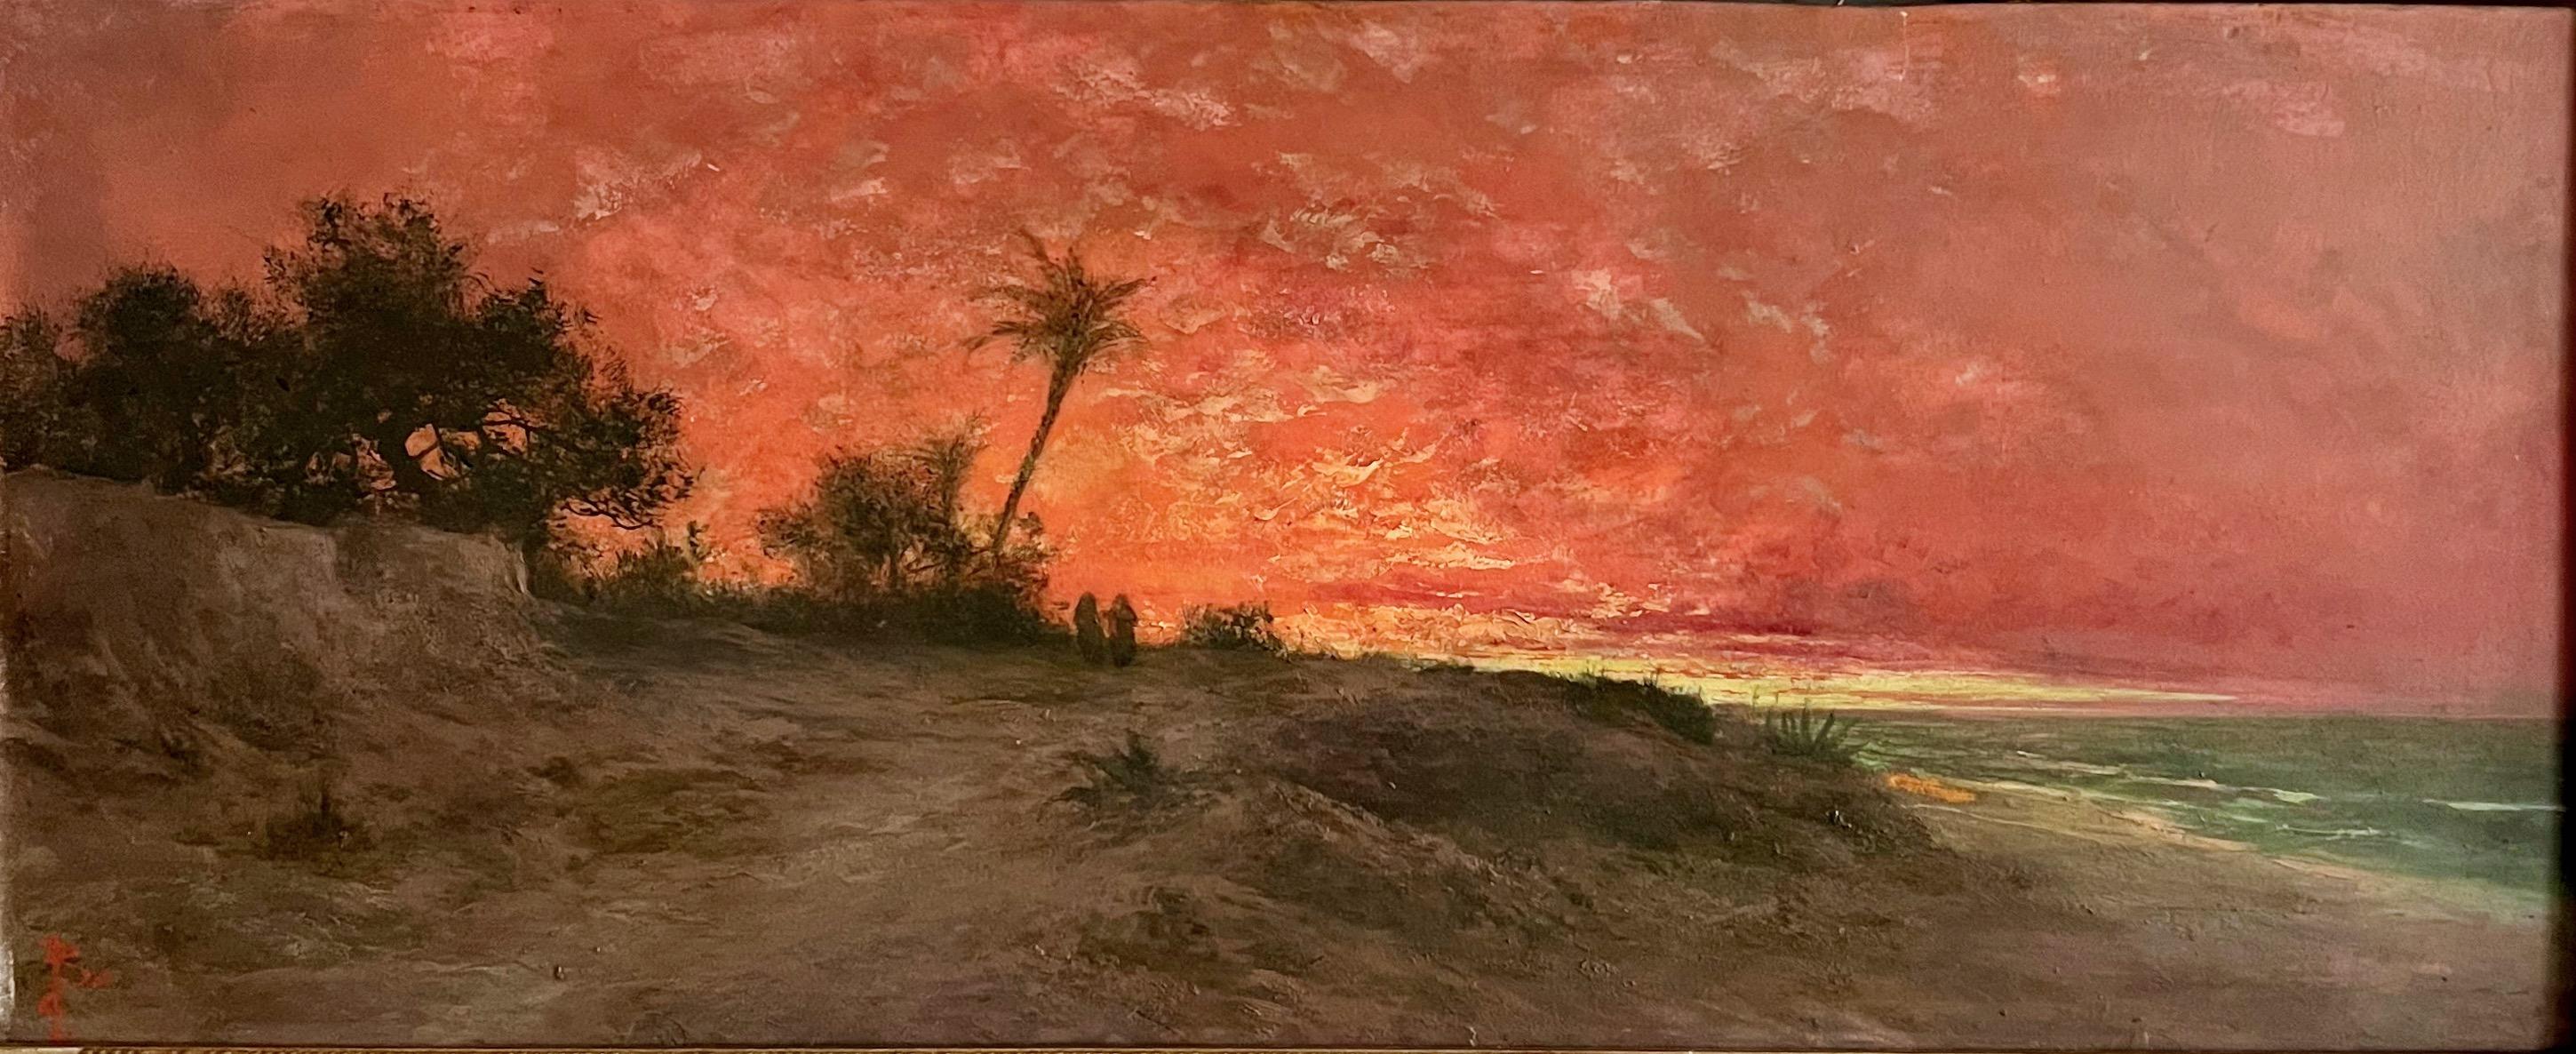 Oriental Sunset Landscape By The Sea, Oil on Cardboard. 19th century.  